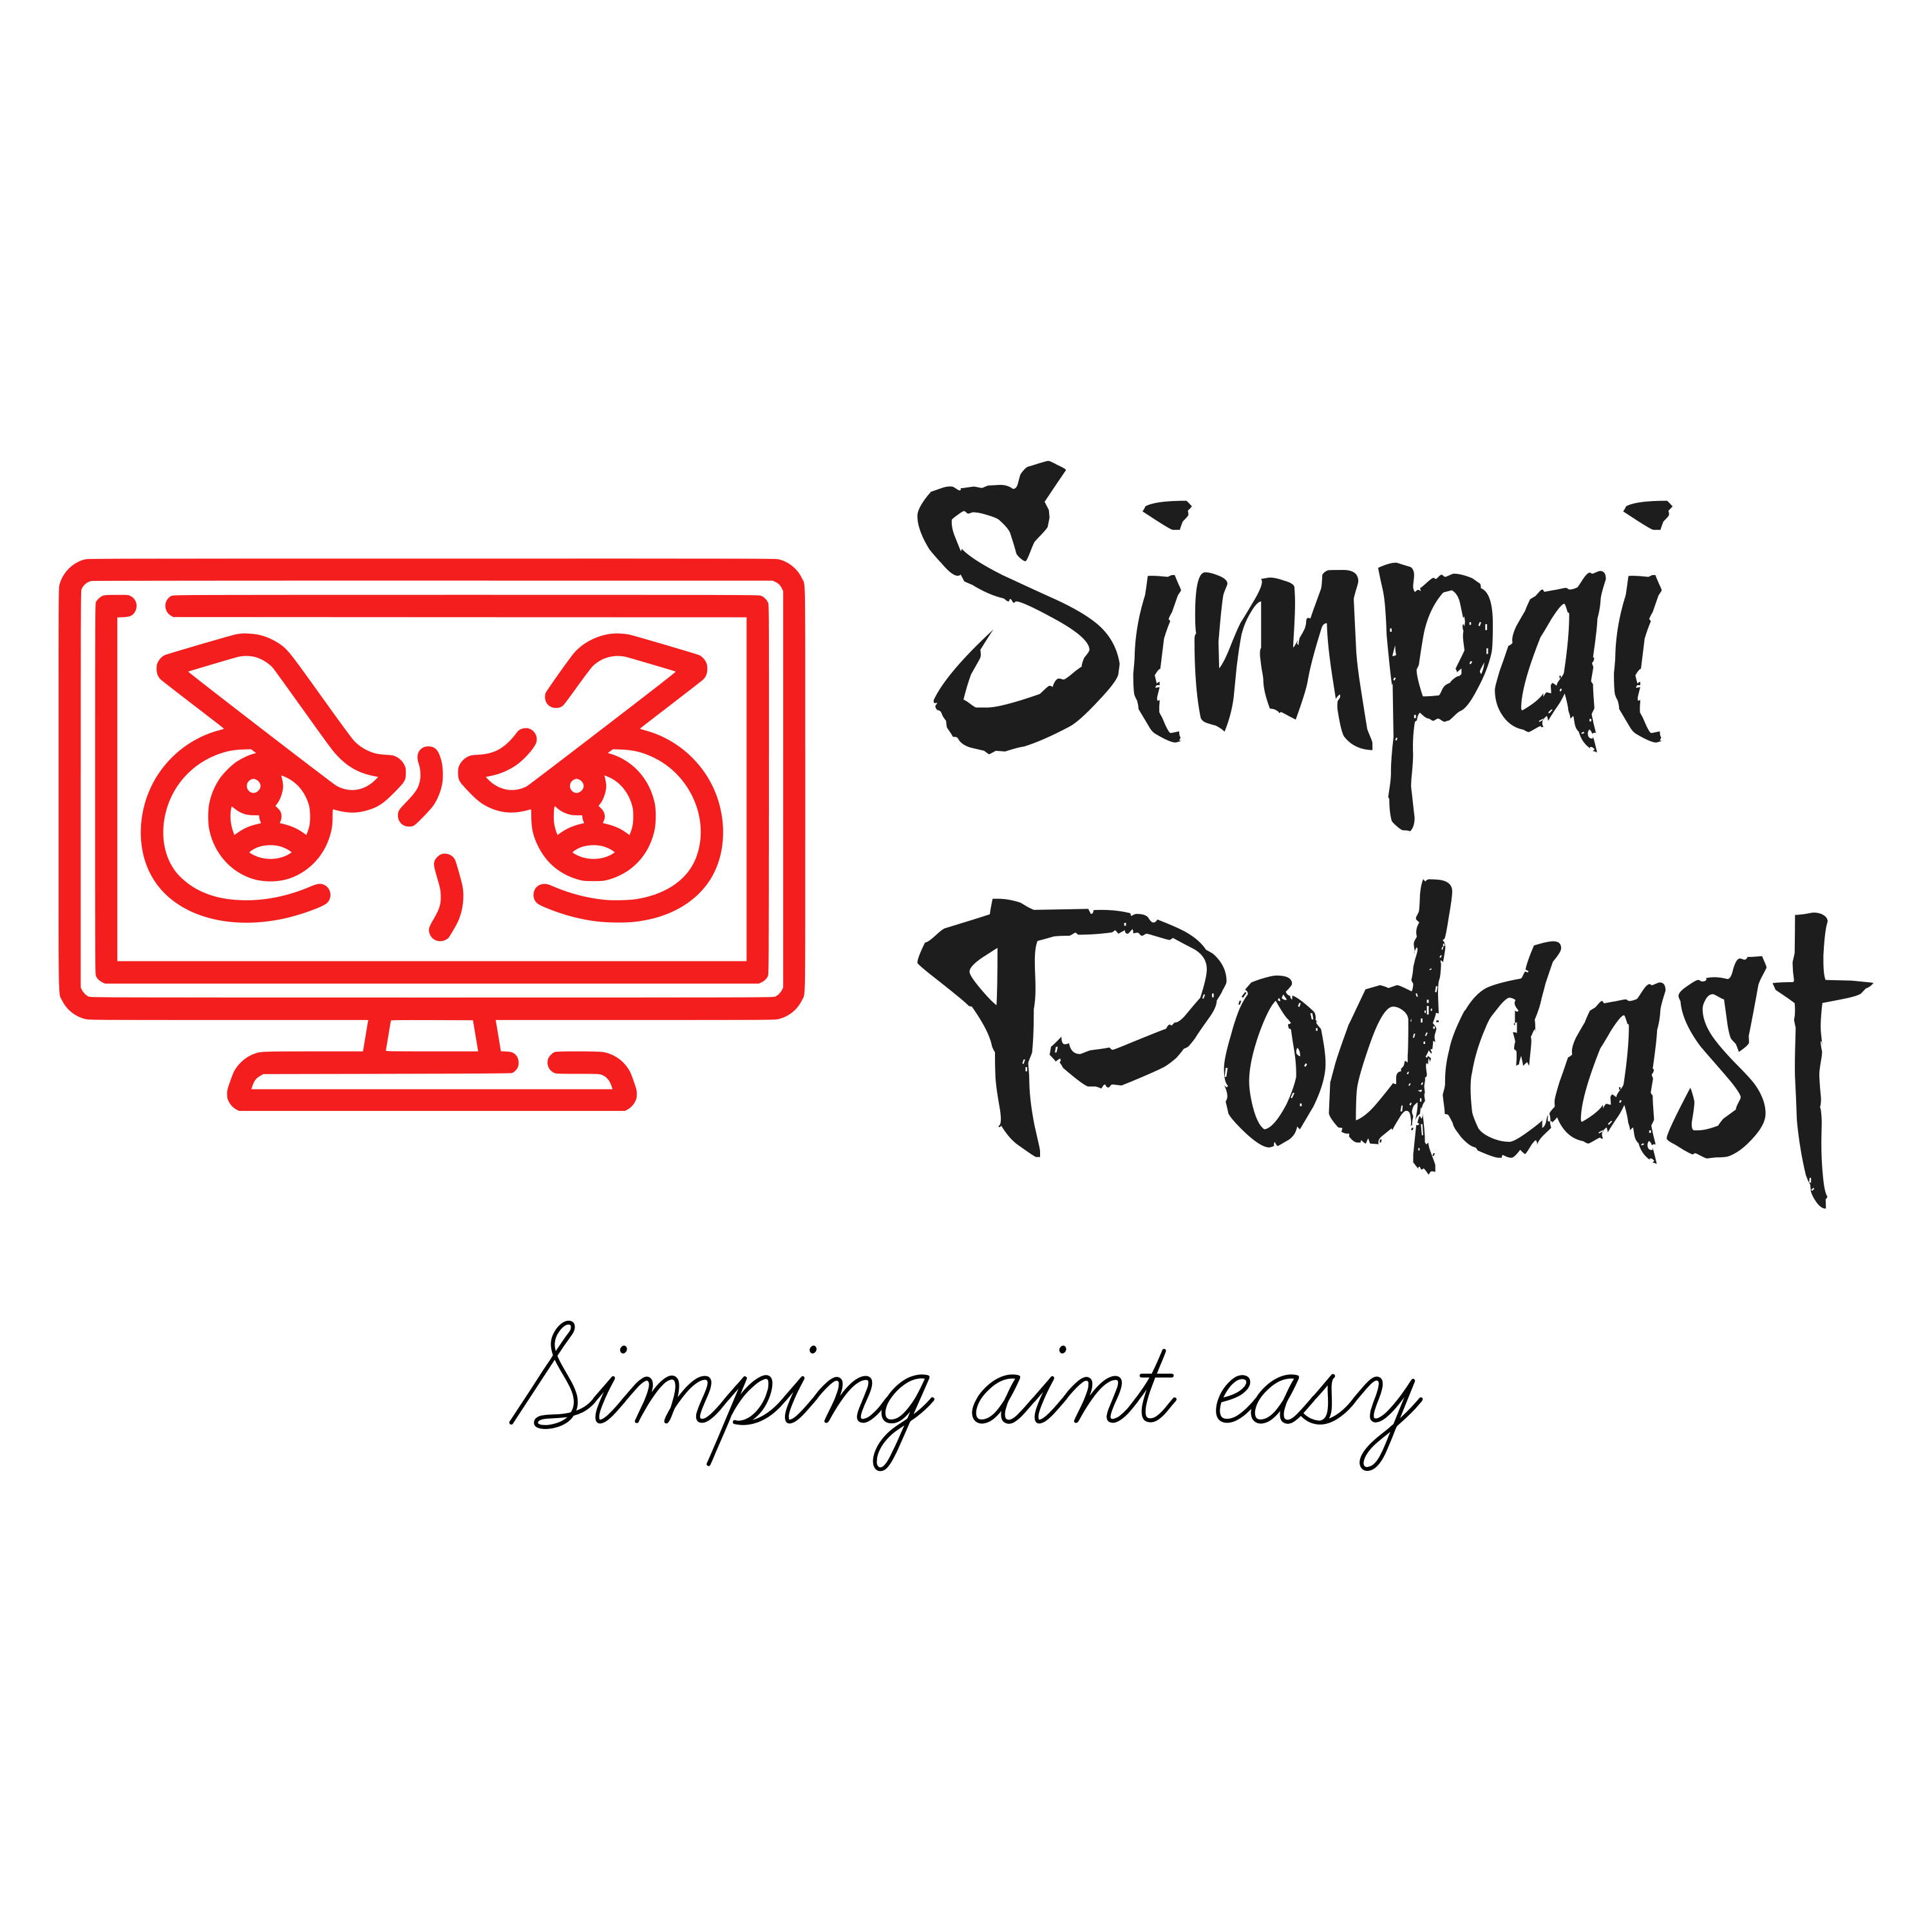 The Simpai Podcast